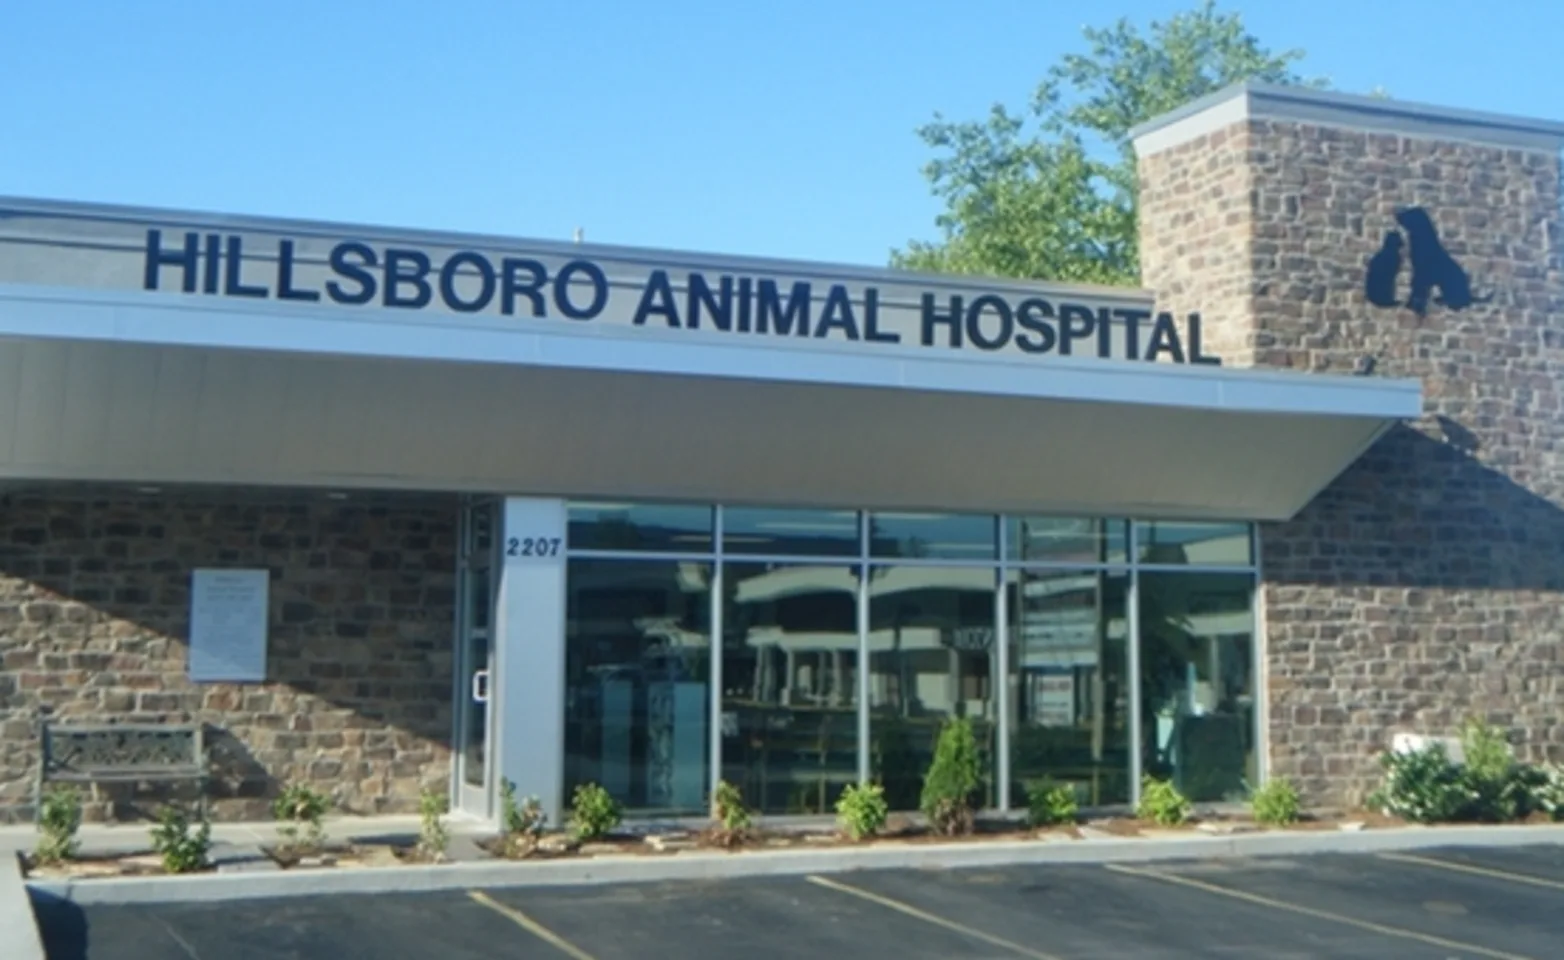 Hillsboro Animal Hospital building